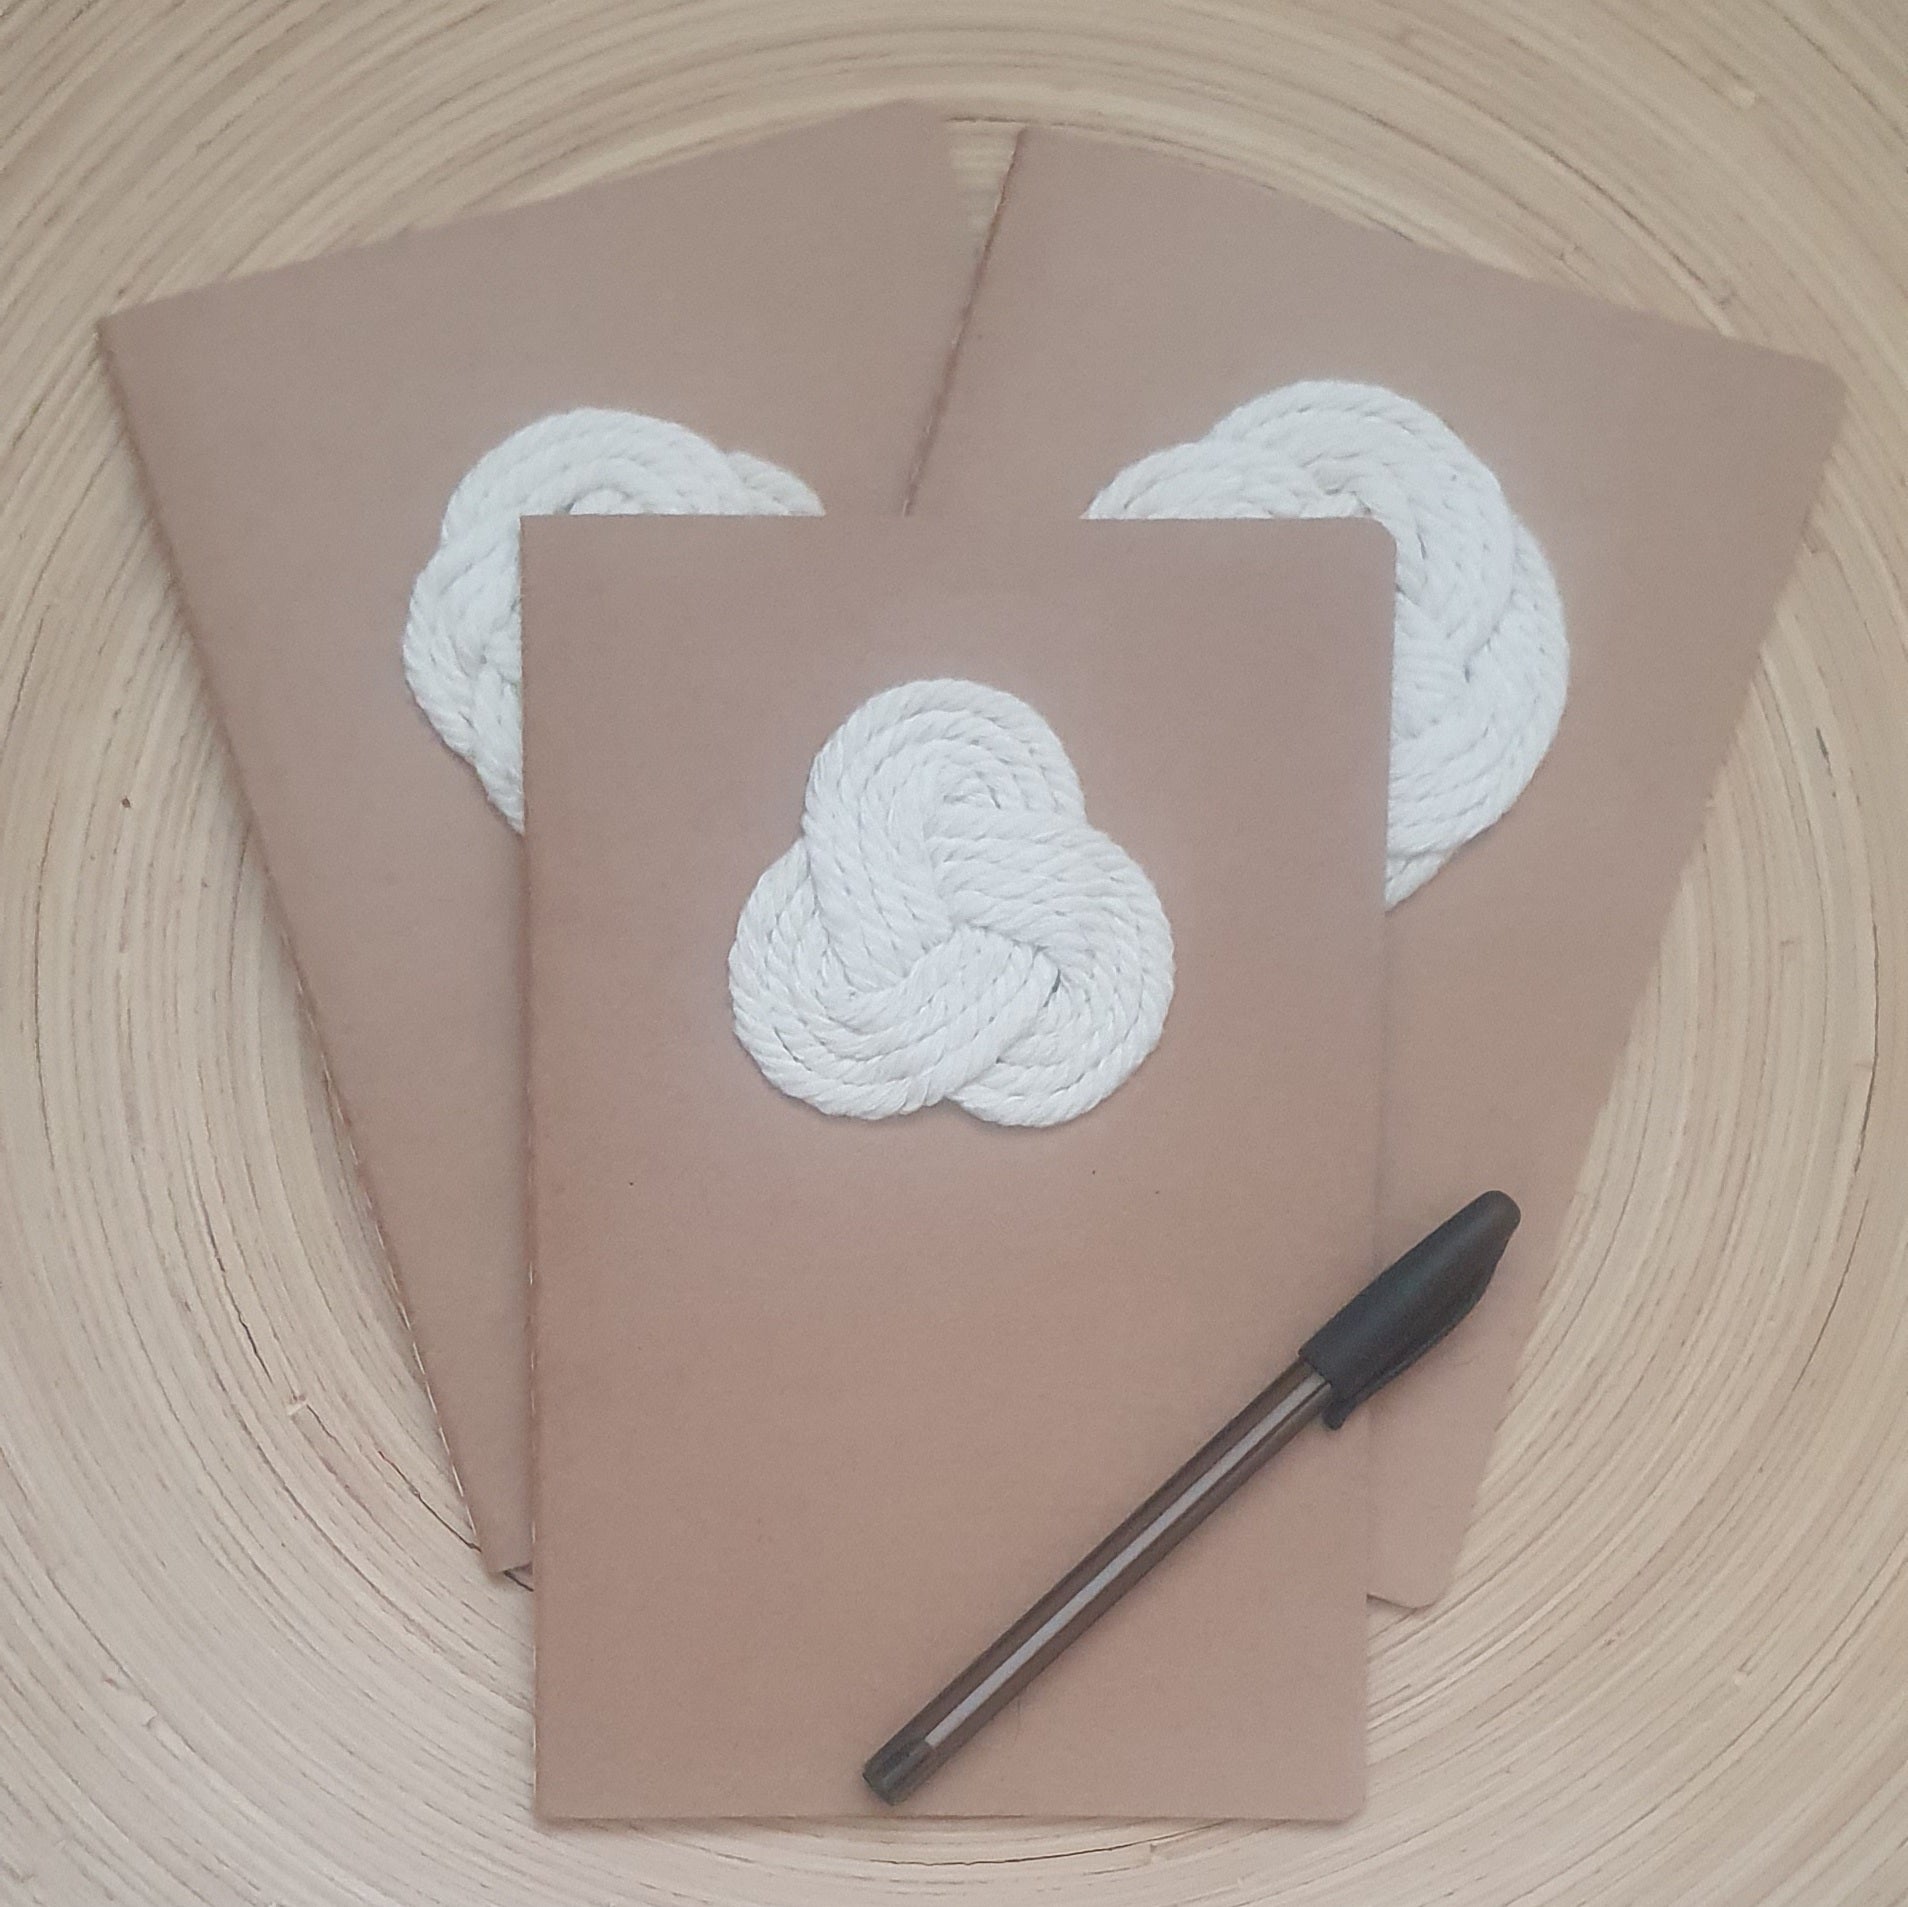 Kraft brown notebook/journal with Turk's Head Knot - 3 point design